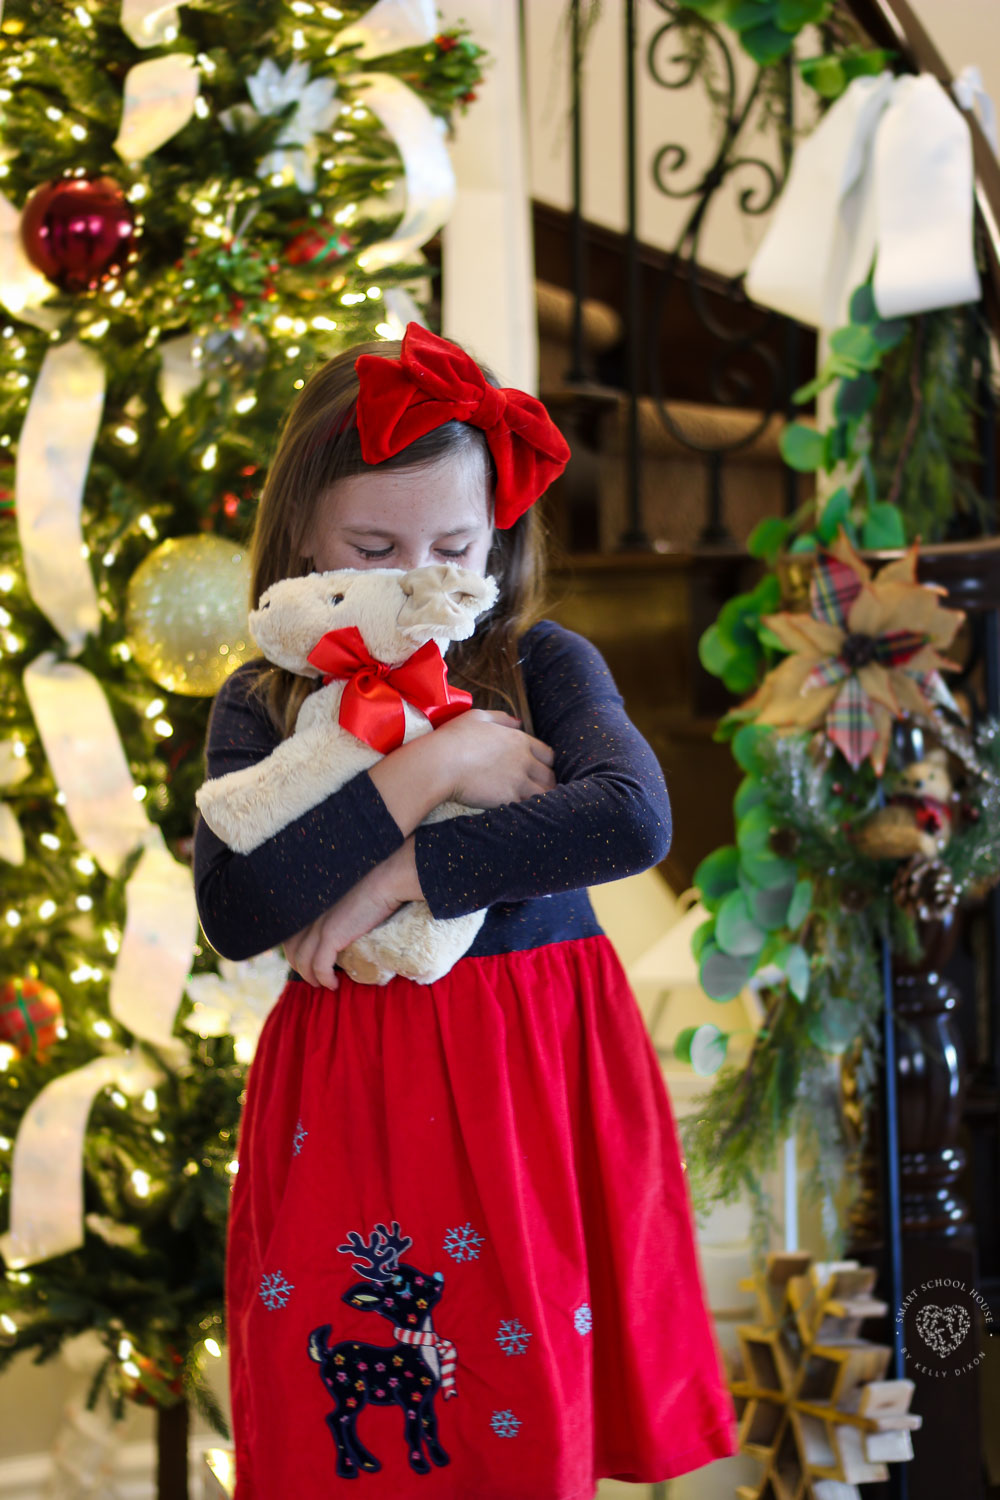 ADORABLE Melissa & Doug Christmas puppy stuffed animal from Kohl's #KohlsToys #KohlsFinds #AD